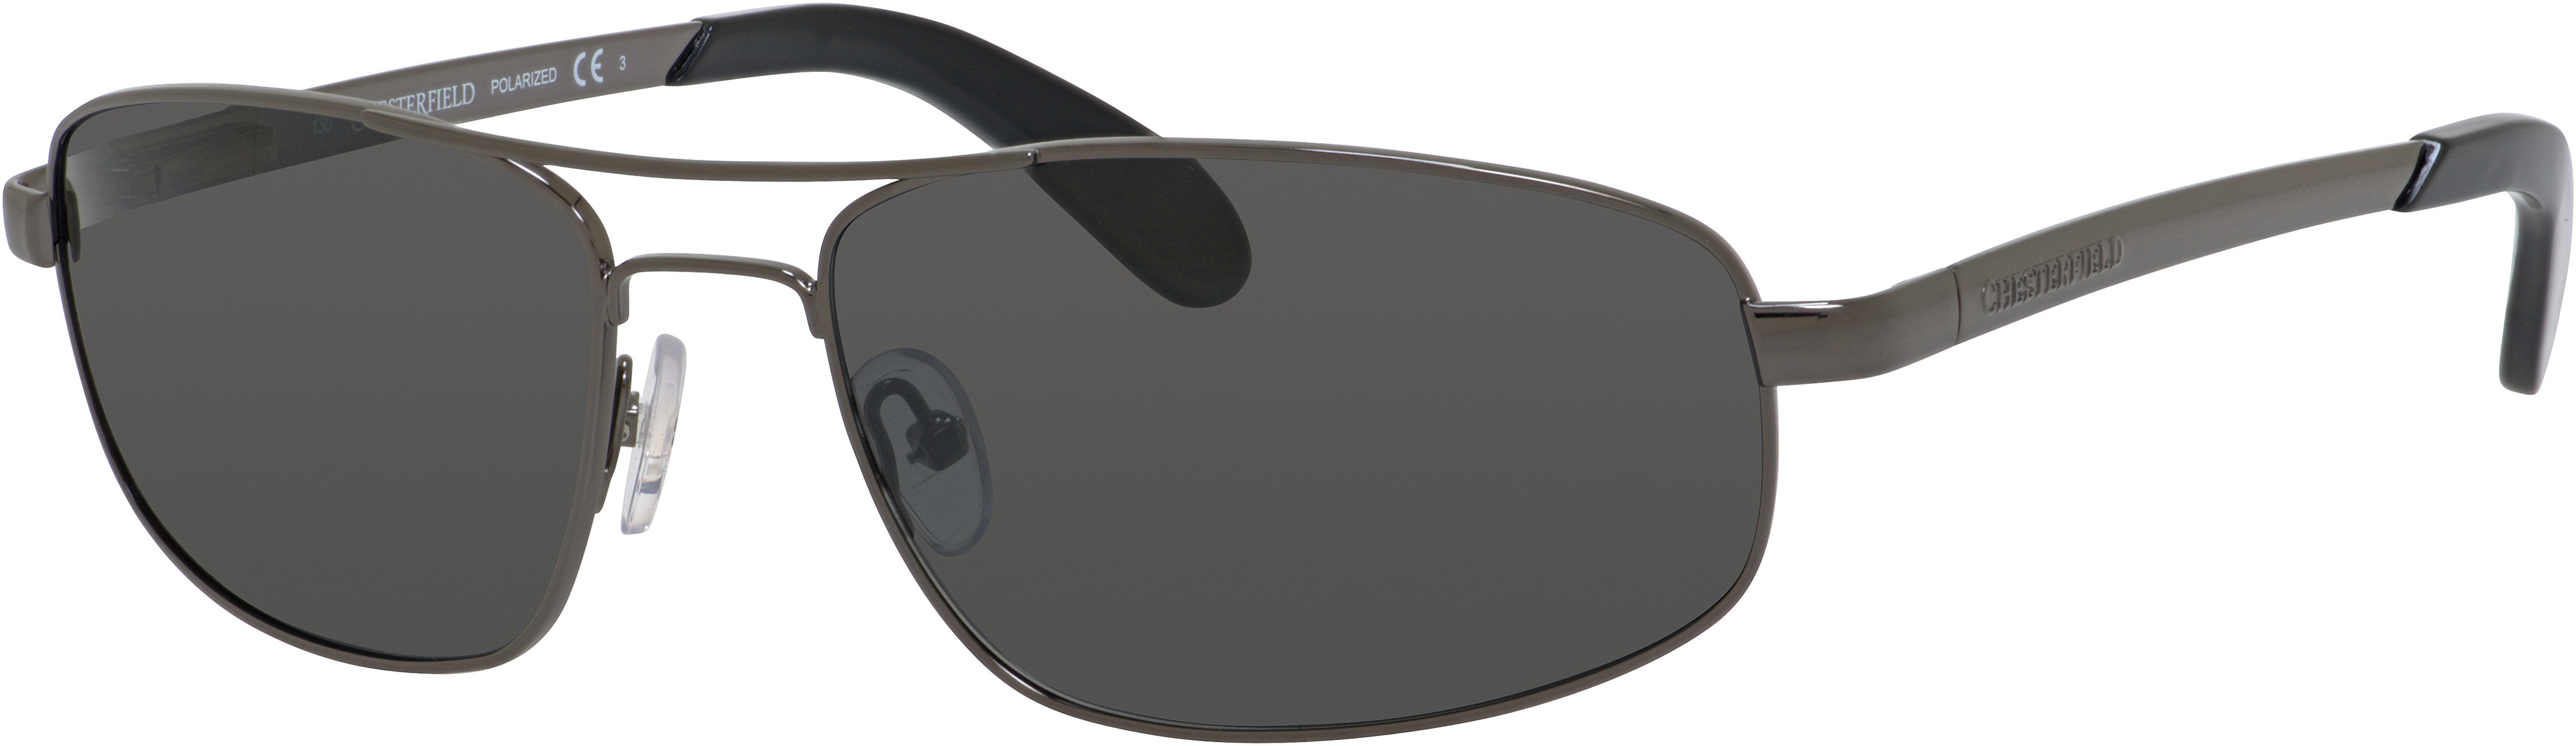 Chesterfield Top Dog/S Rectangular Sunglasses 0C2K-0C2K  Shiny Gunmetal (Y2 Gray Polarized)